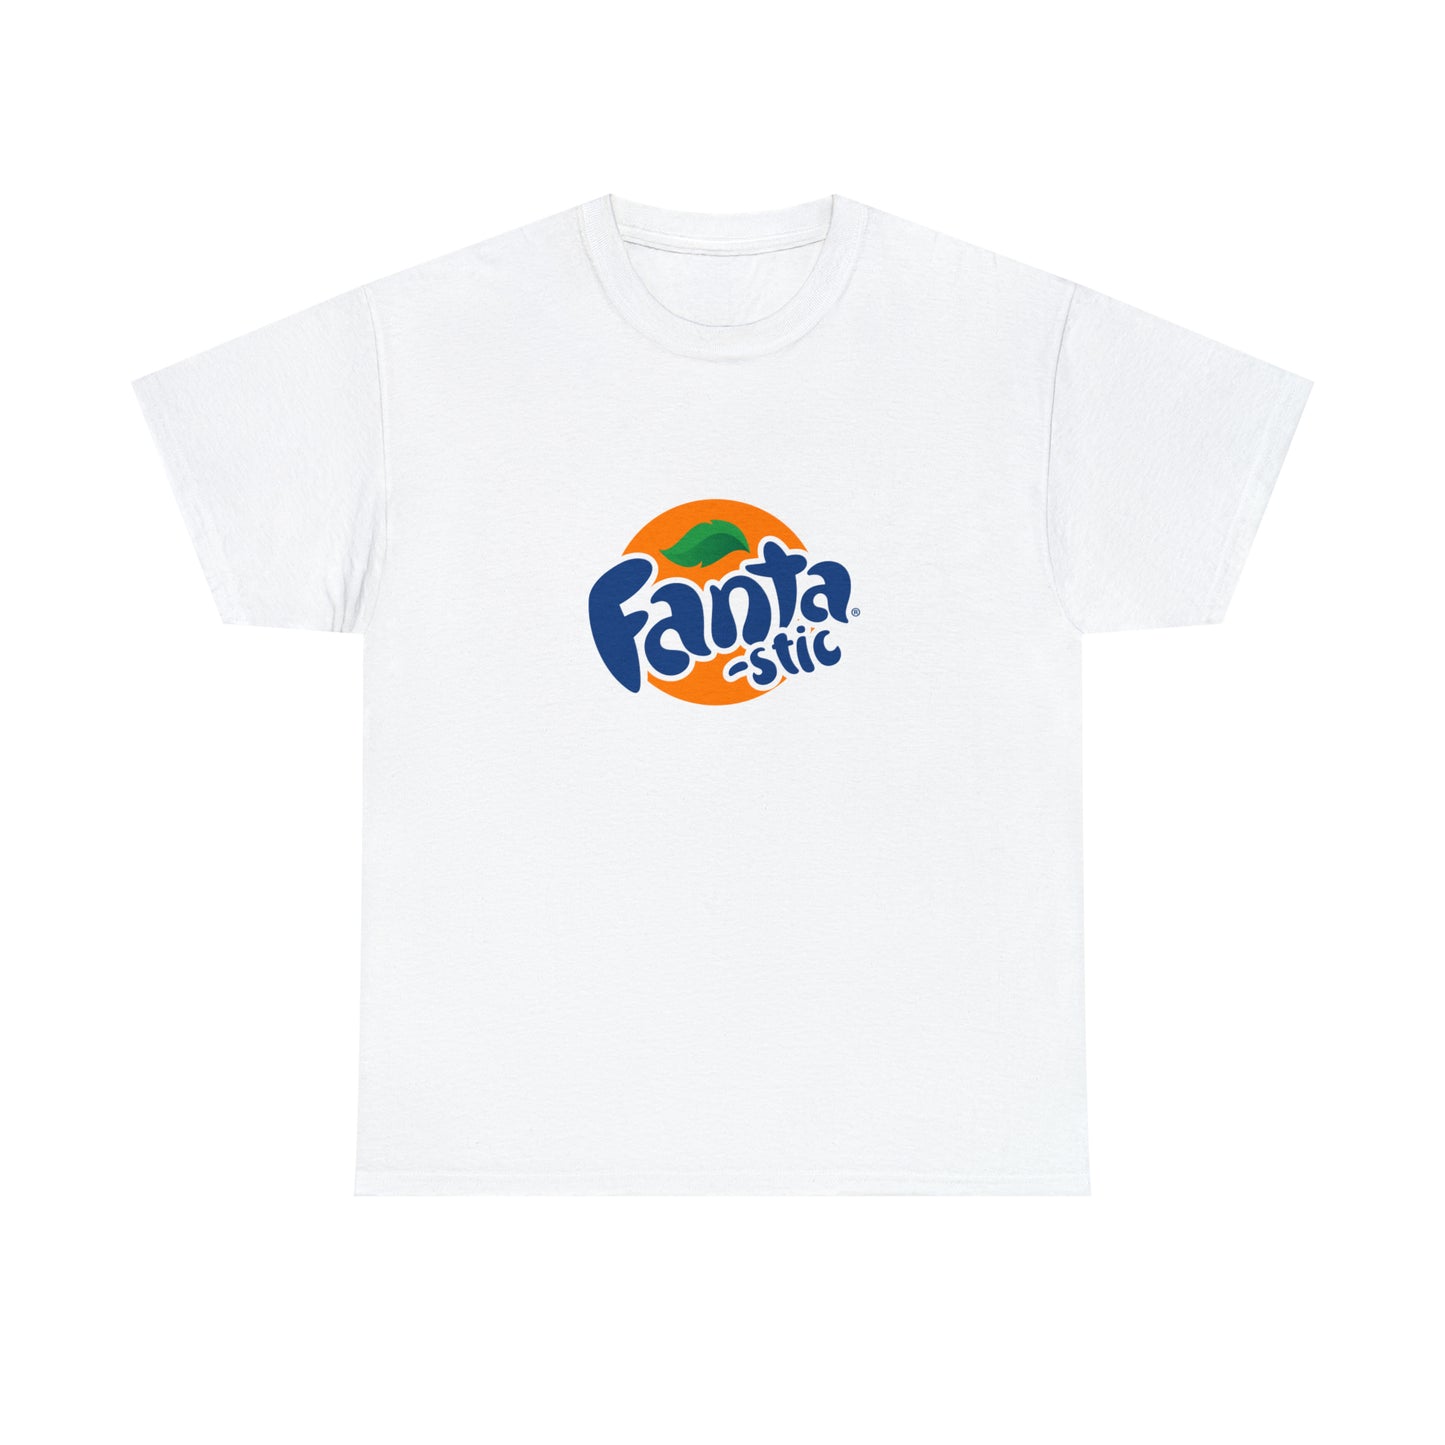 Custom Parody T-shirt, "Fanta-stic" design